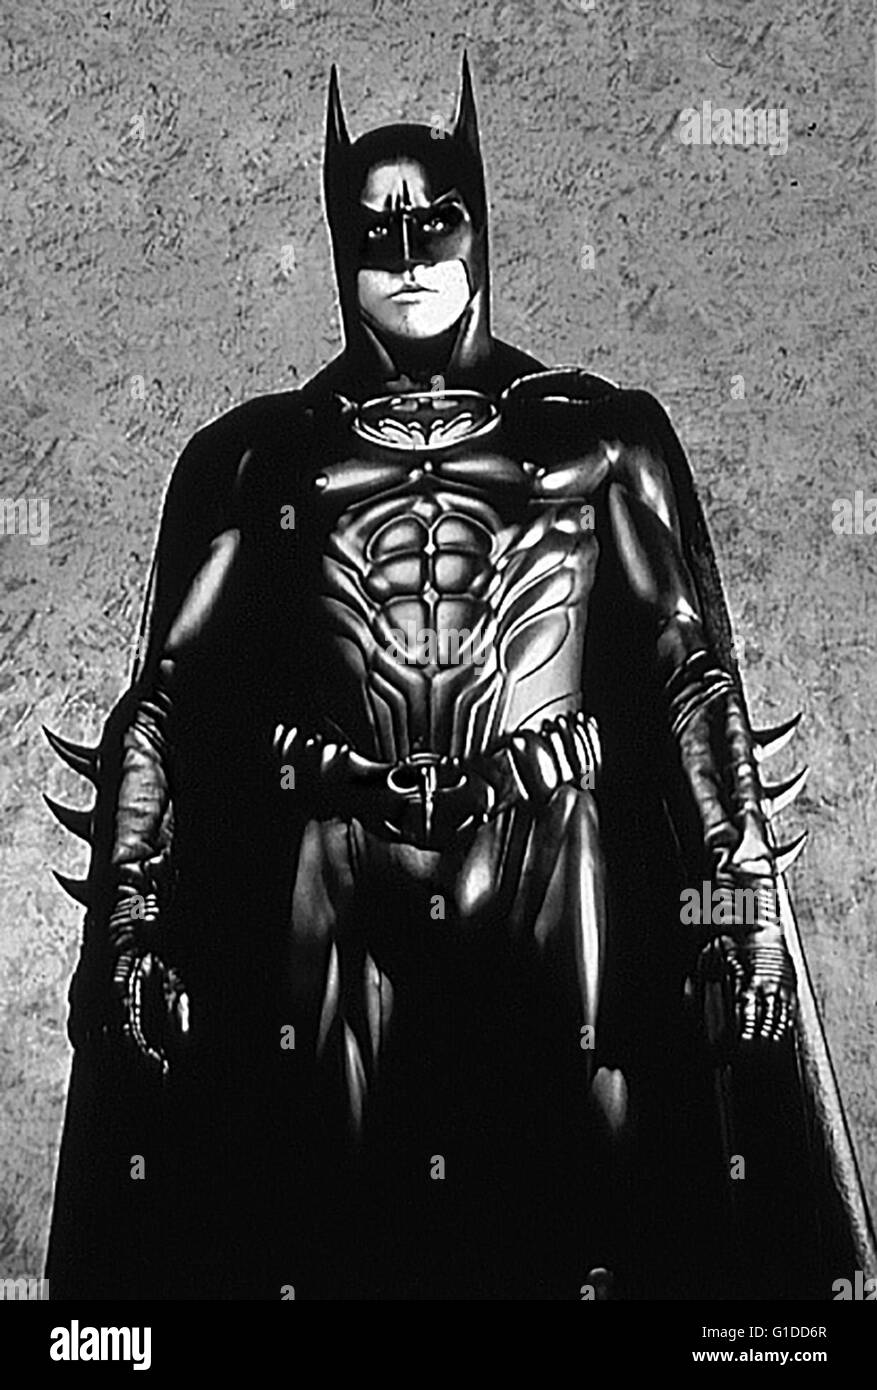 download kilmer batman suit